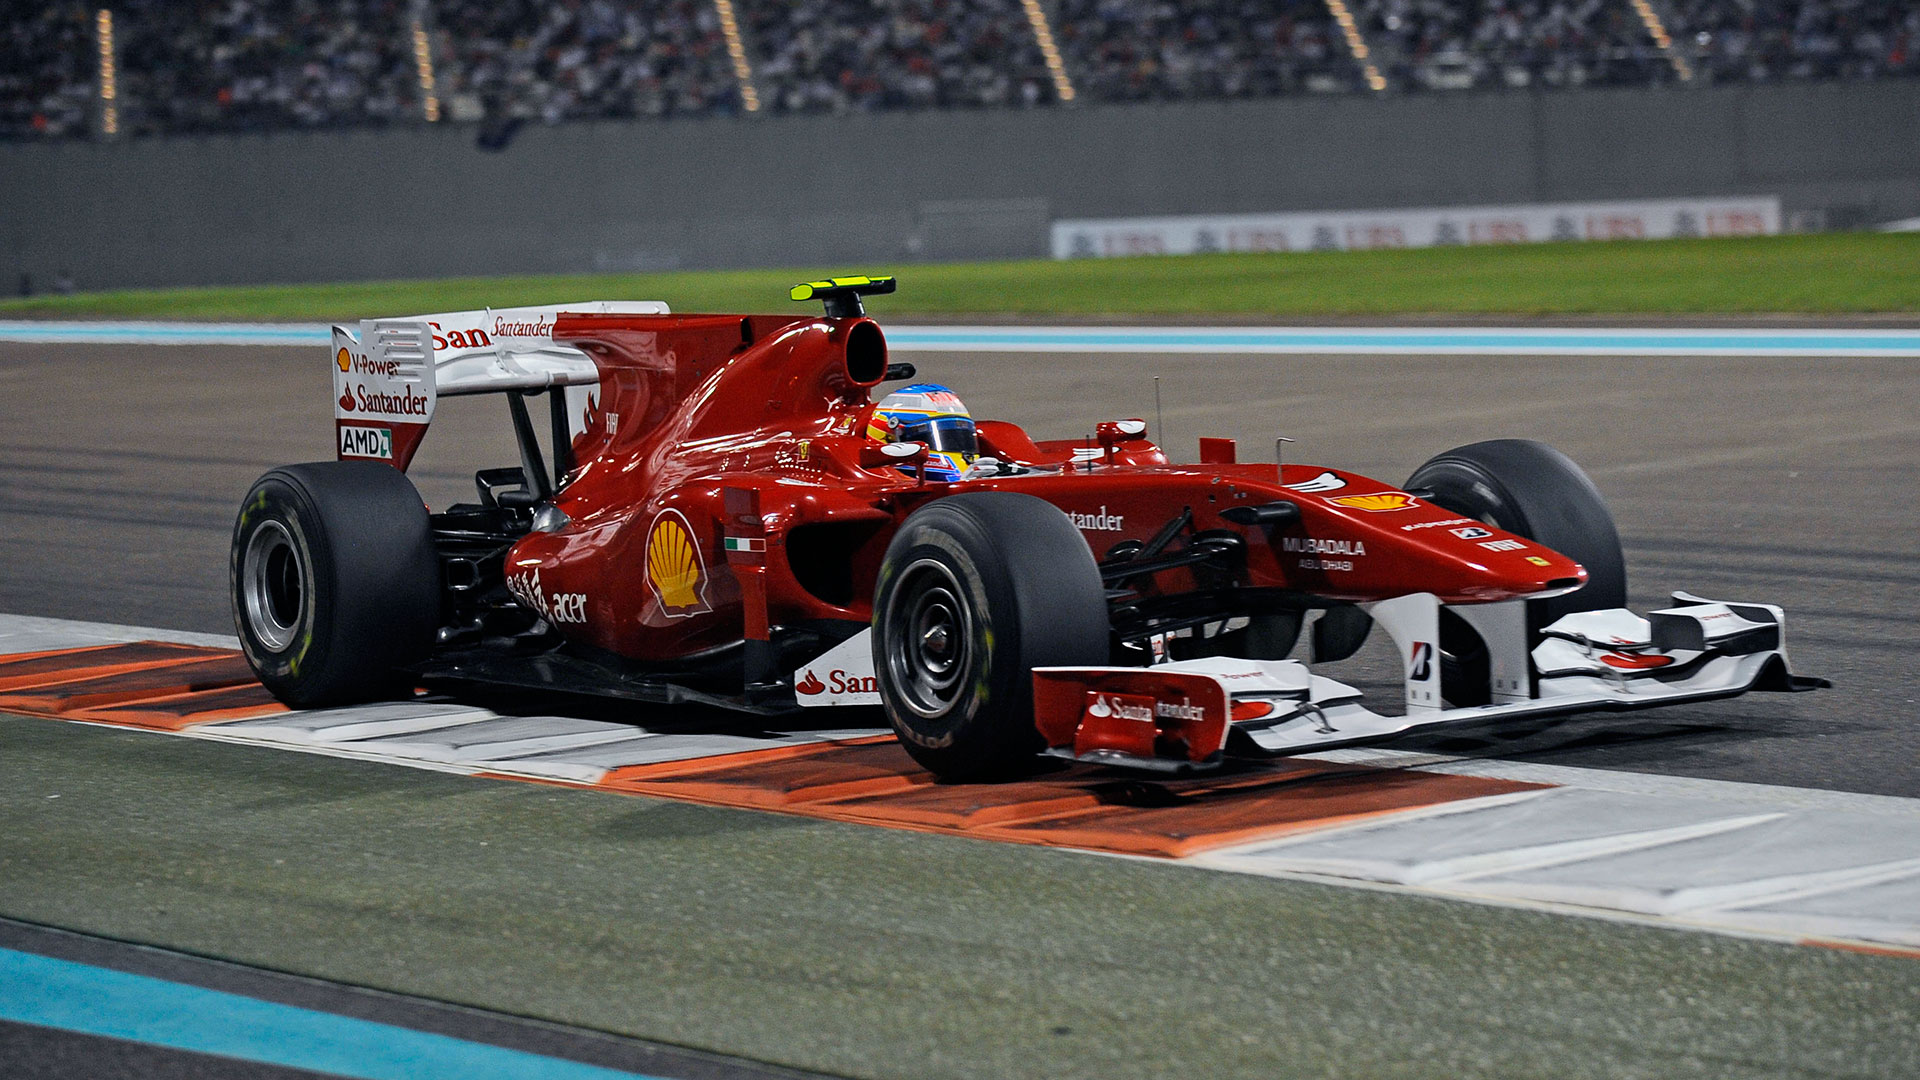 HD Wallpaper Formula Grand Prix Of Abu Dhabi F1 Fansite